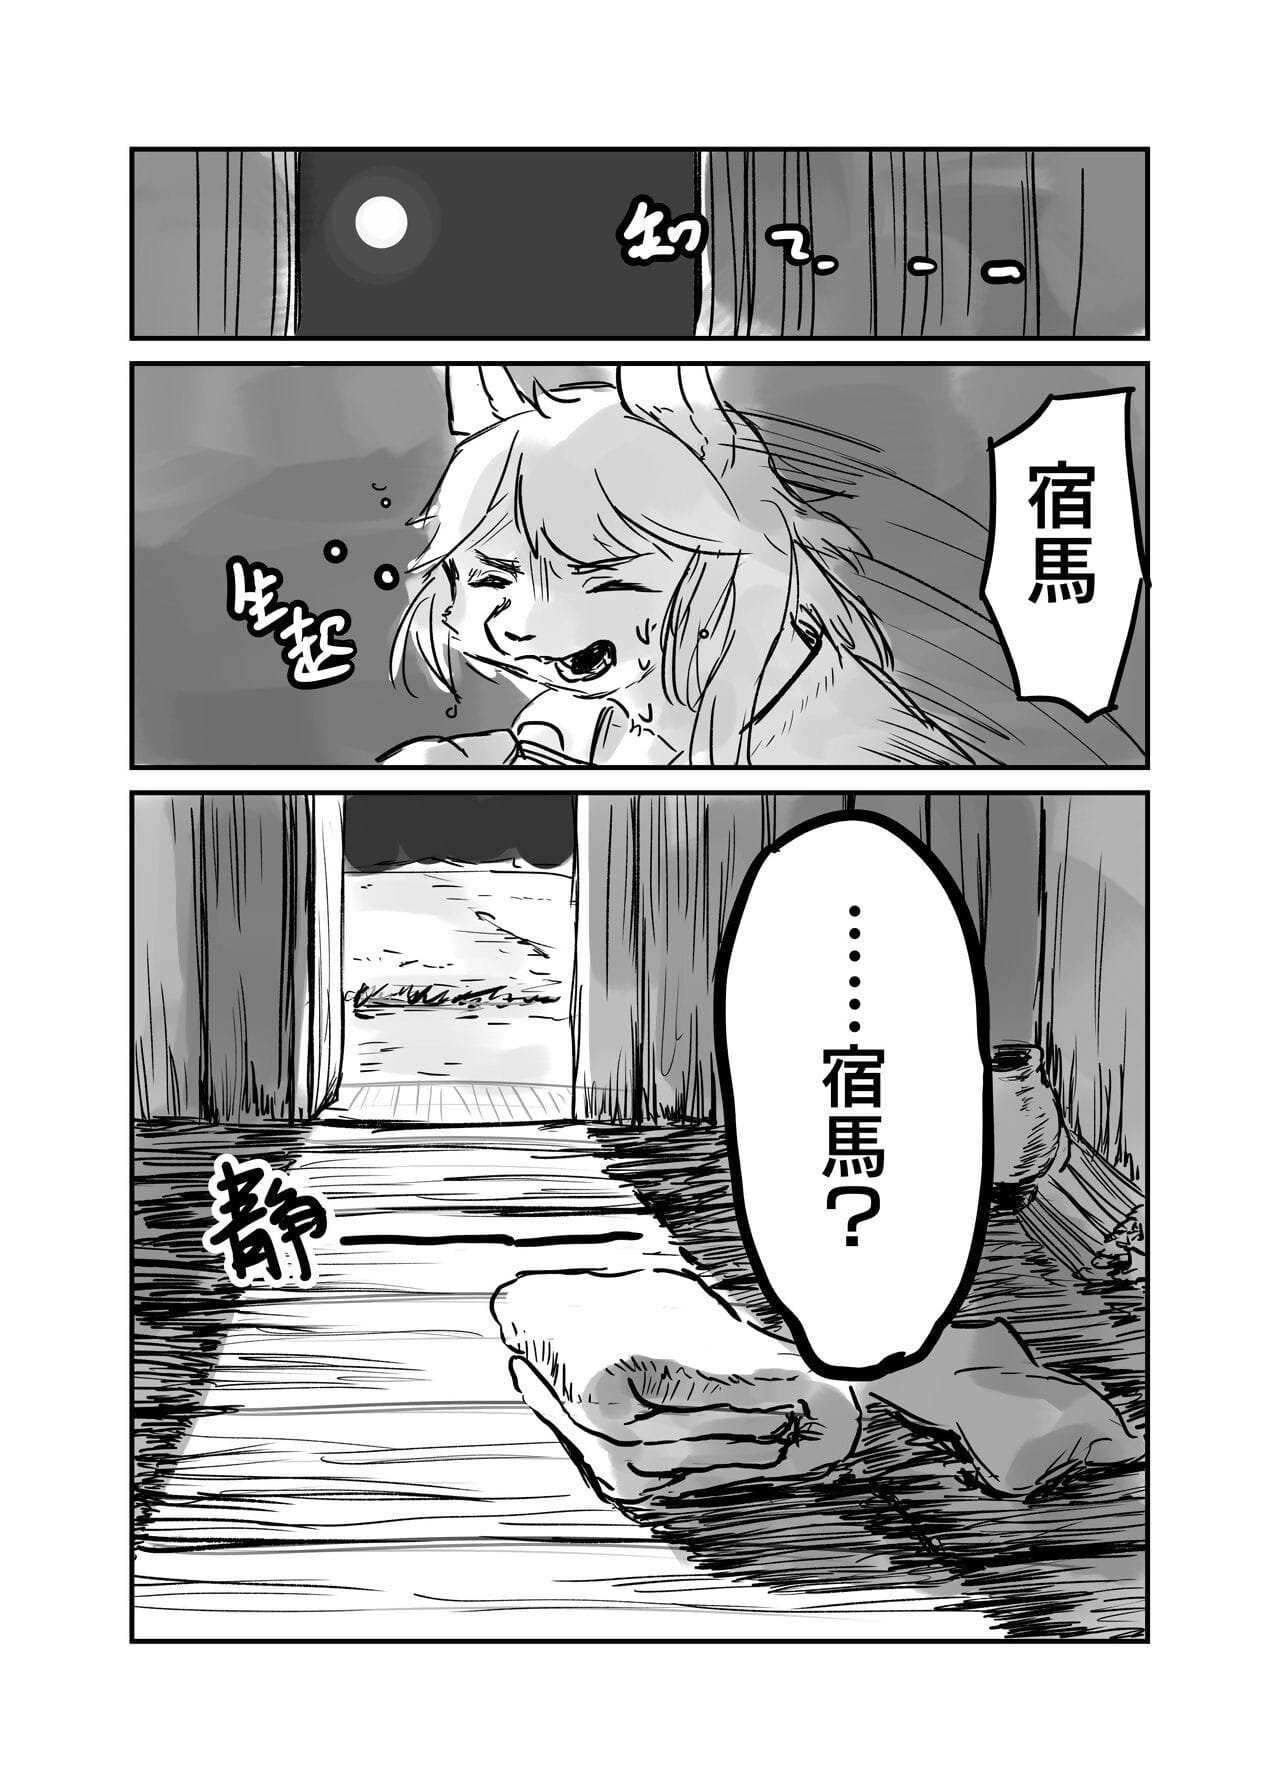 （the ziyaretçi 他乡之人 by：鬼流 PART 2 page 1